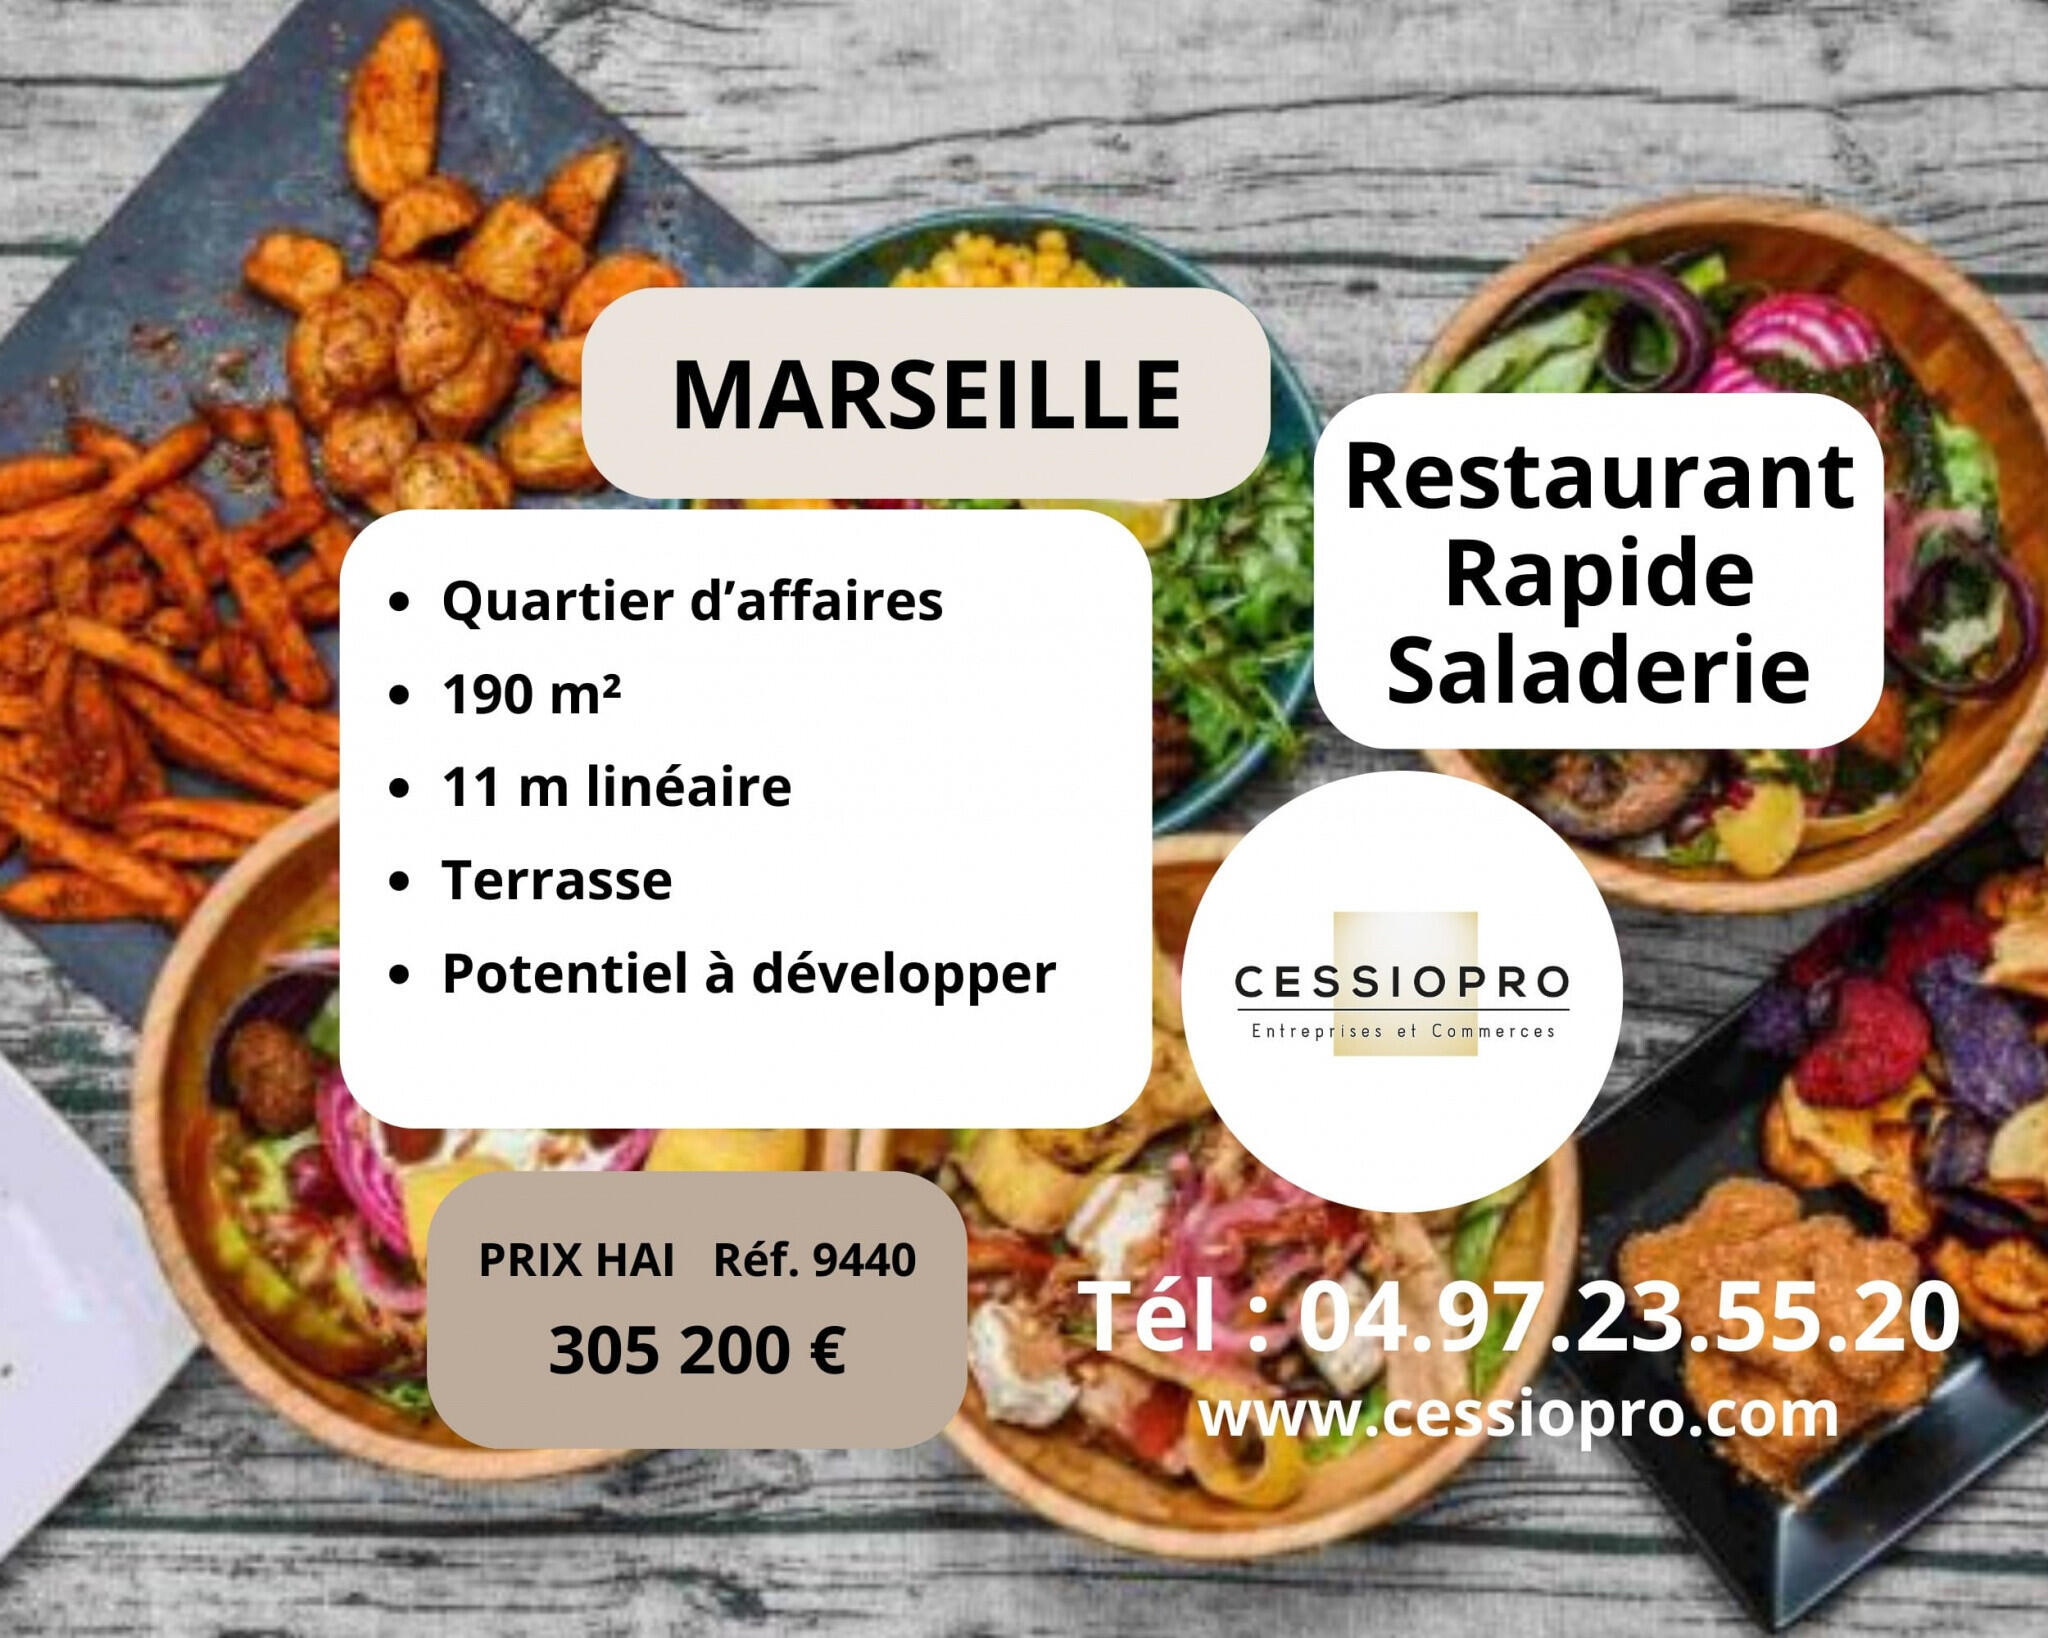 Cède restaurant rapide saladerie de jour Marseille